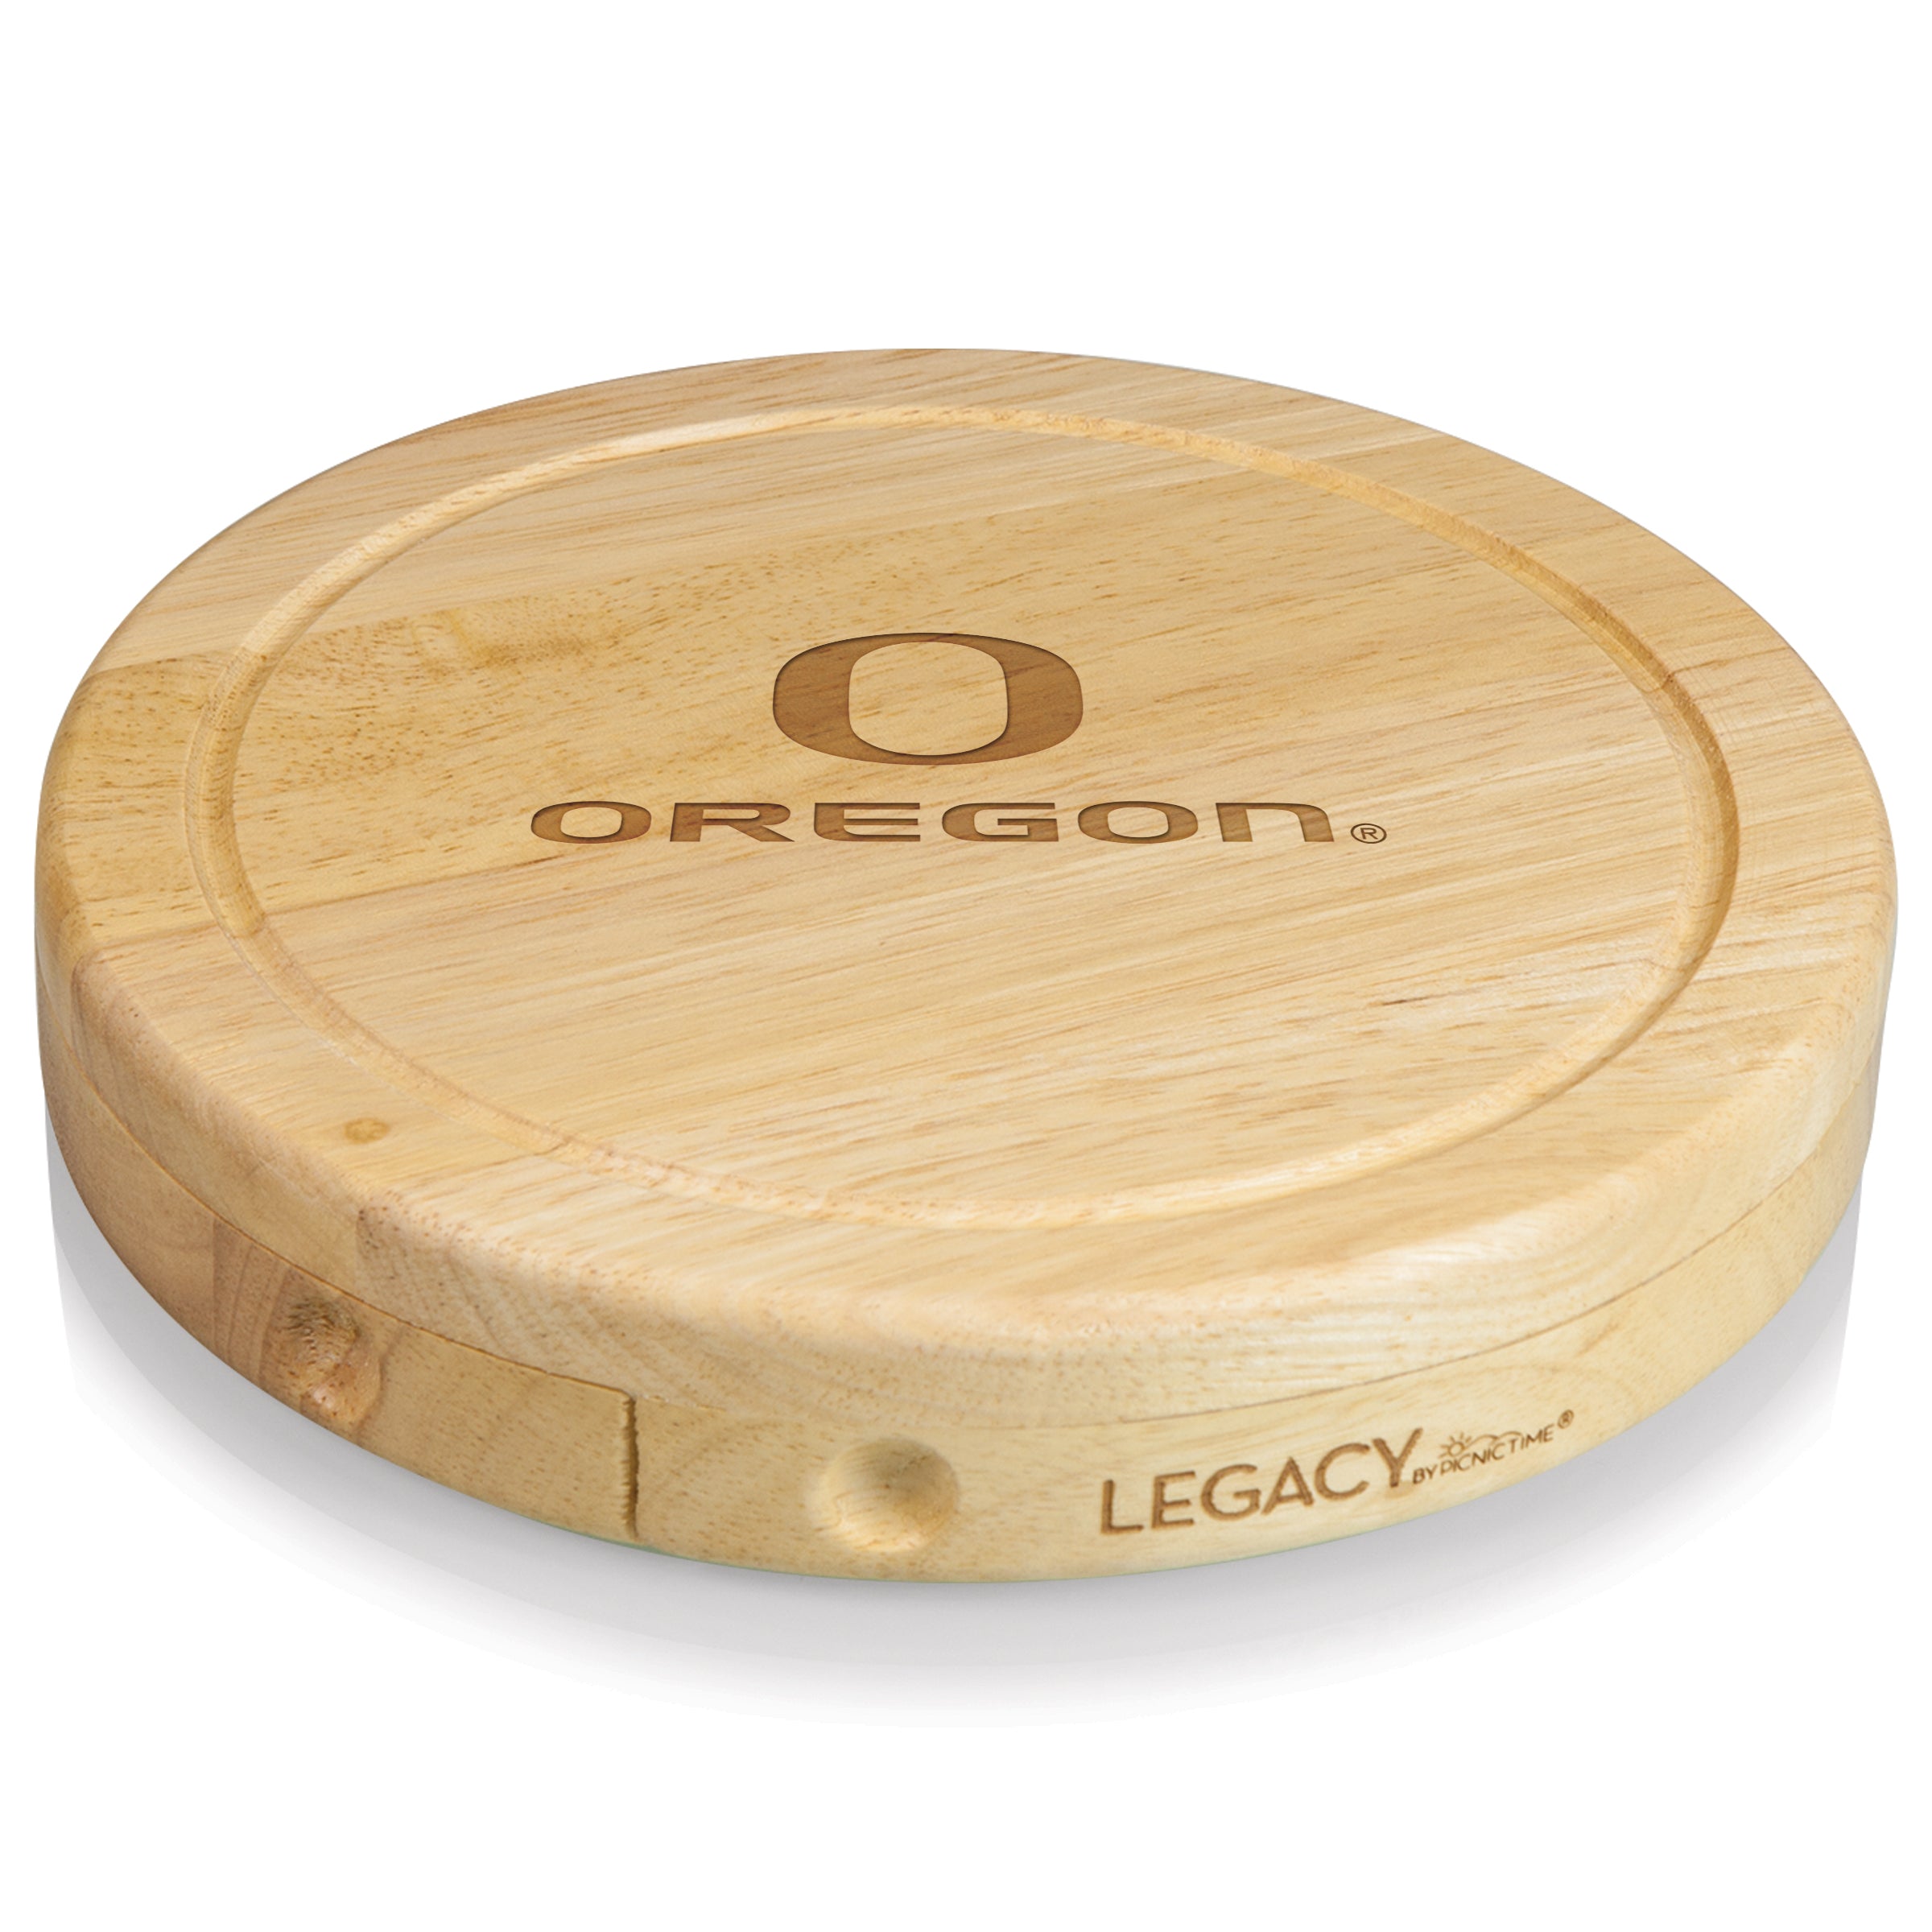 Oregon Ducks - Brie Cheese Cutting Board & Tools Set